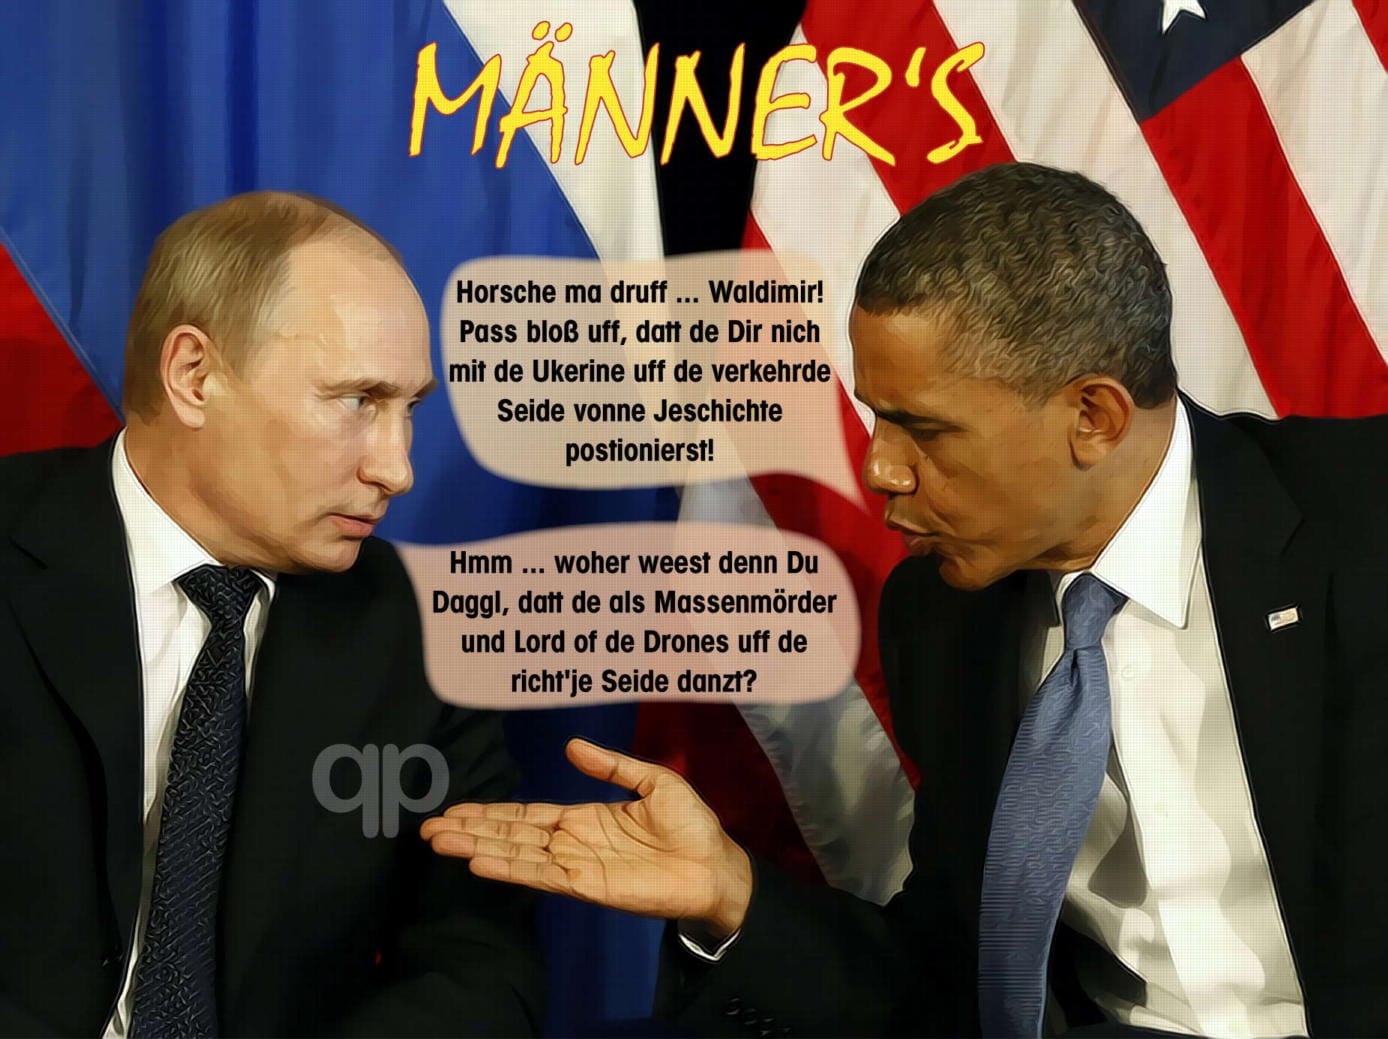 Putin-obama-mens-talk-about-ukraine-and-history-Kopie